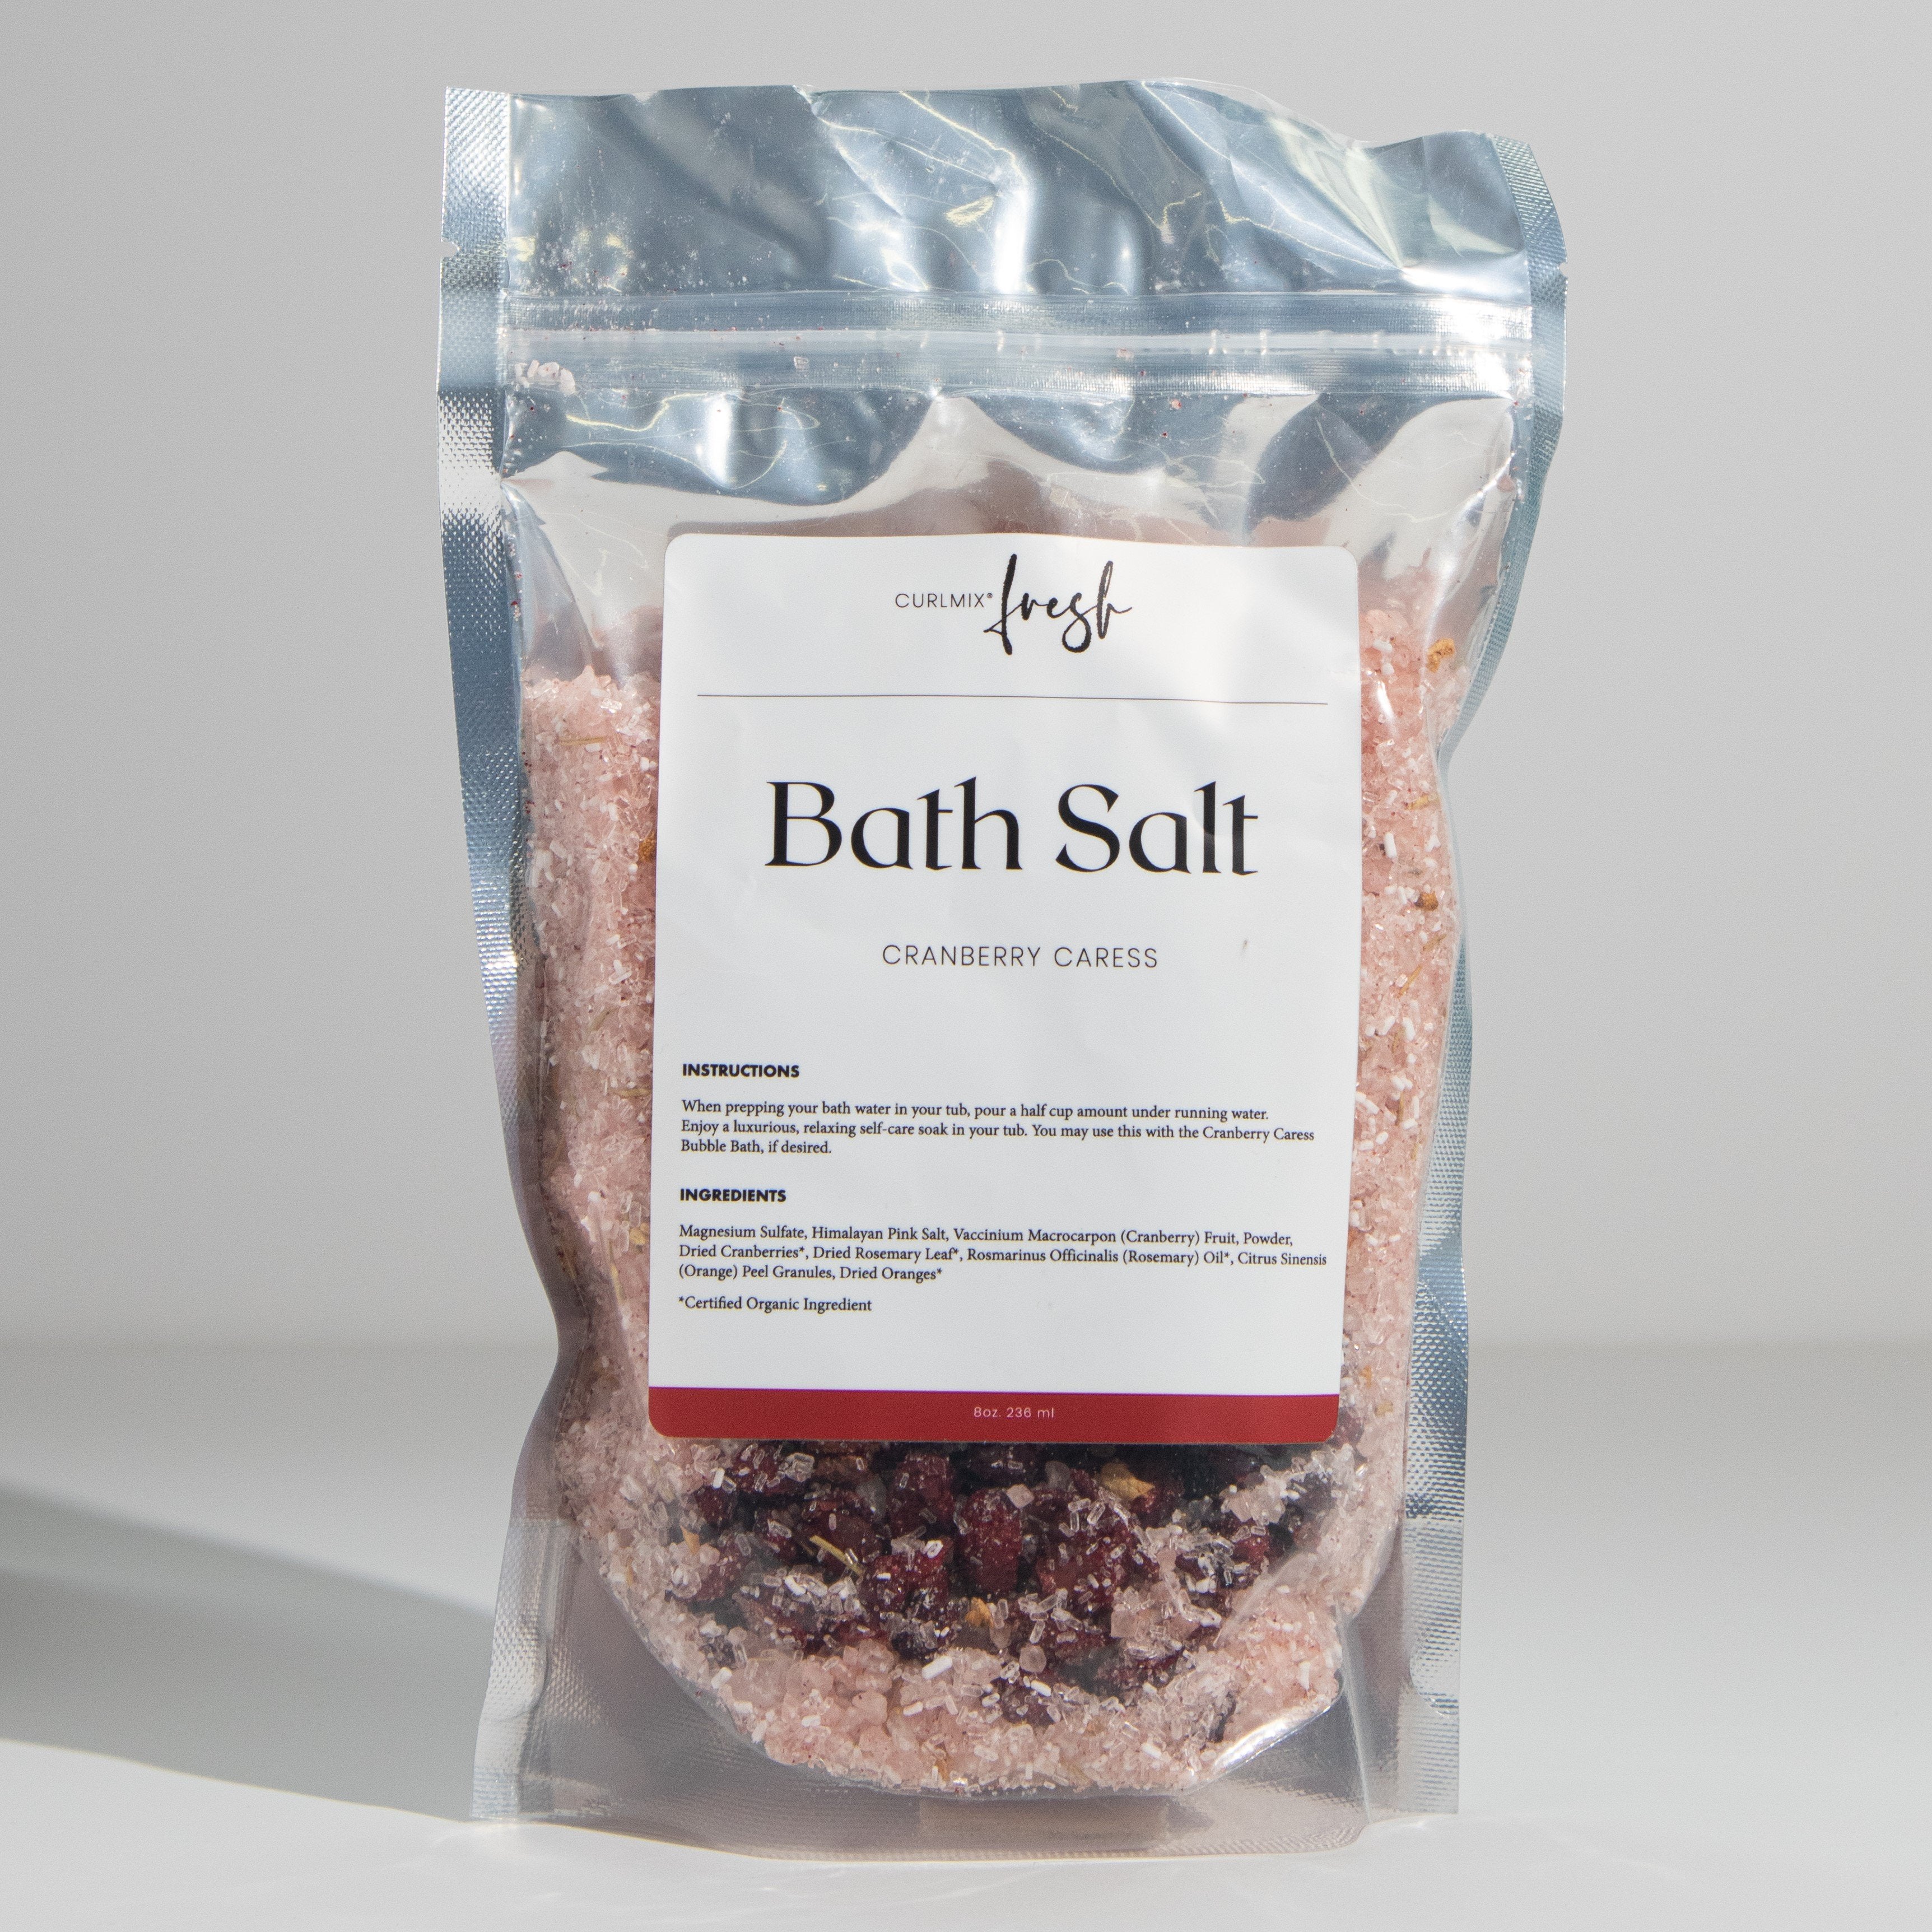 Cranberry Caress Bath Salt CurlMix Fresh